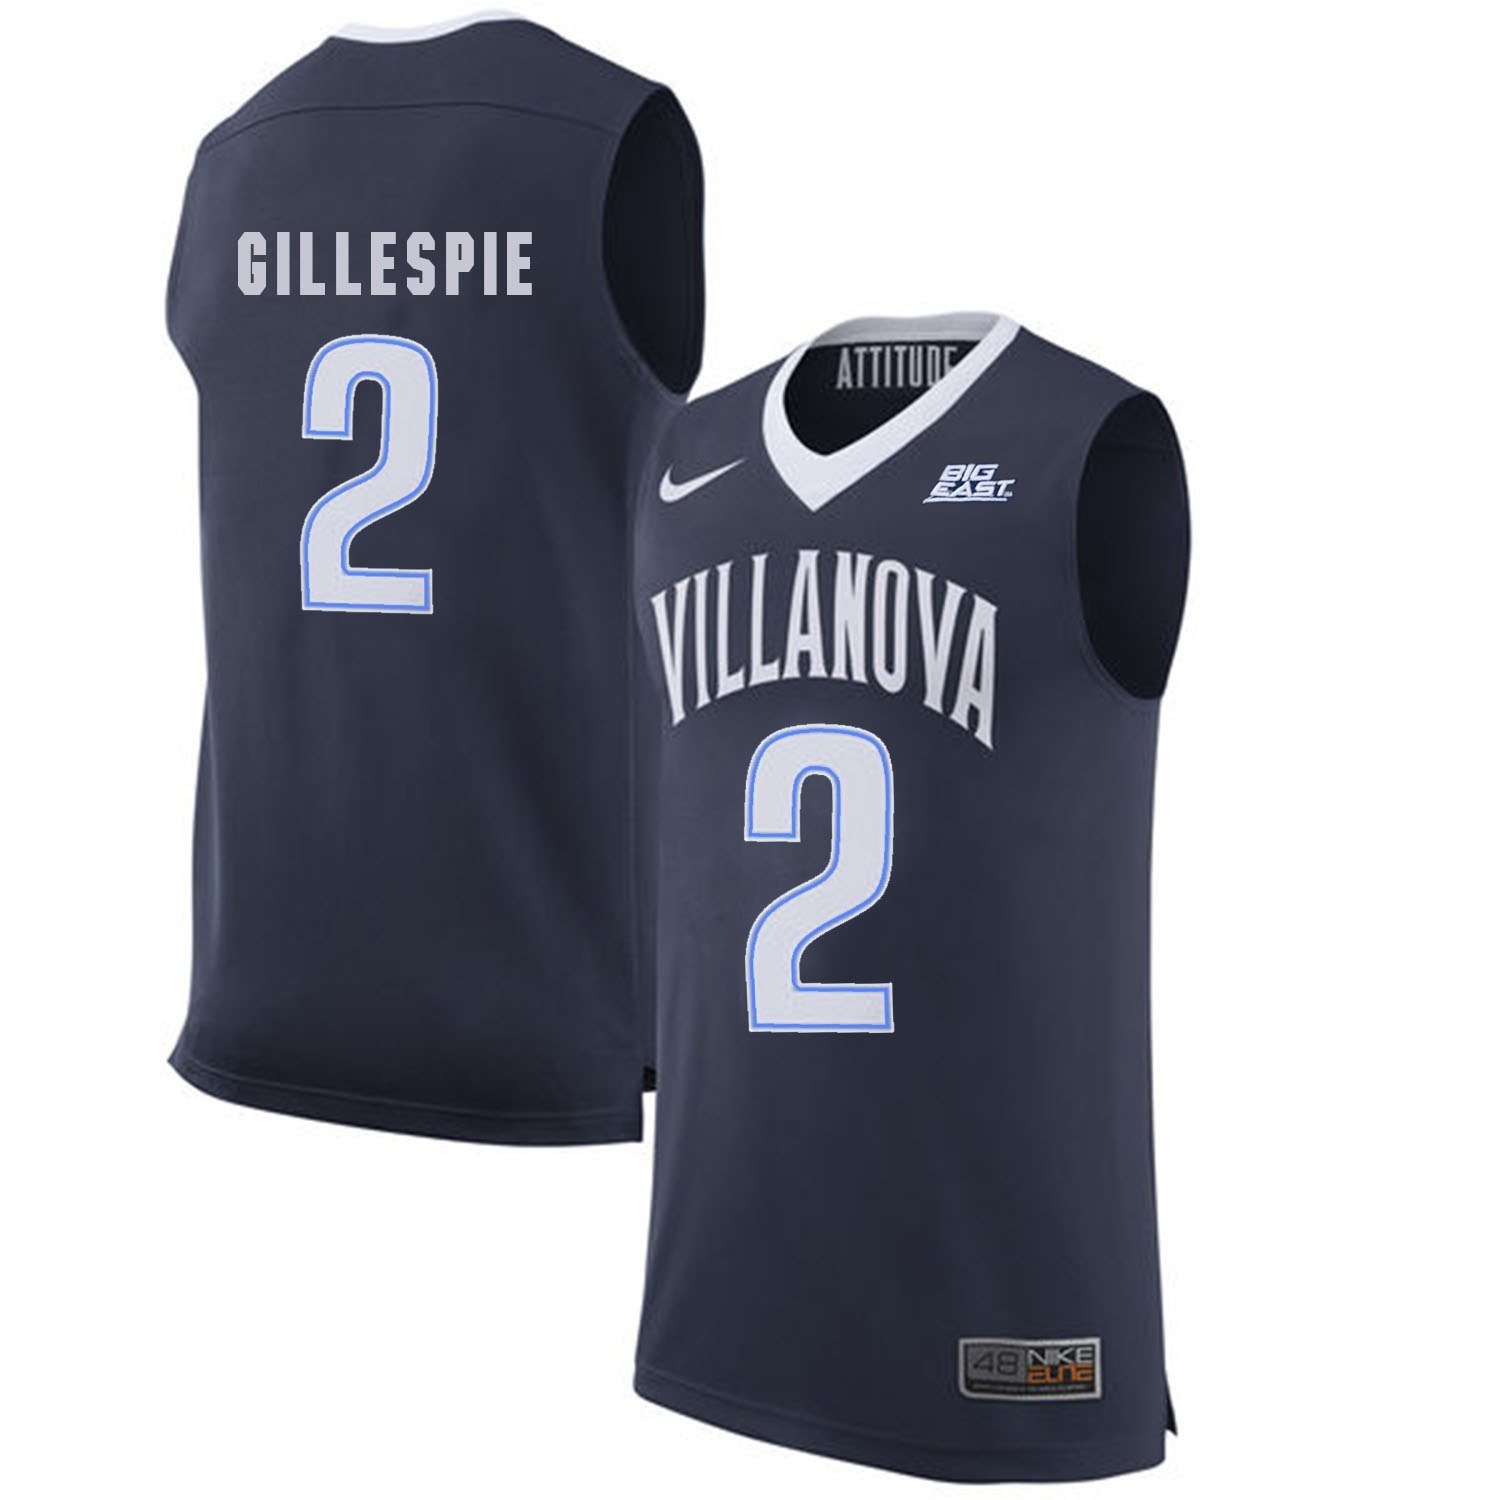 Villanova Wildcats 2 Collin Gillespie Navy College Basketball Elite Jersey - Click Image to Close